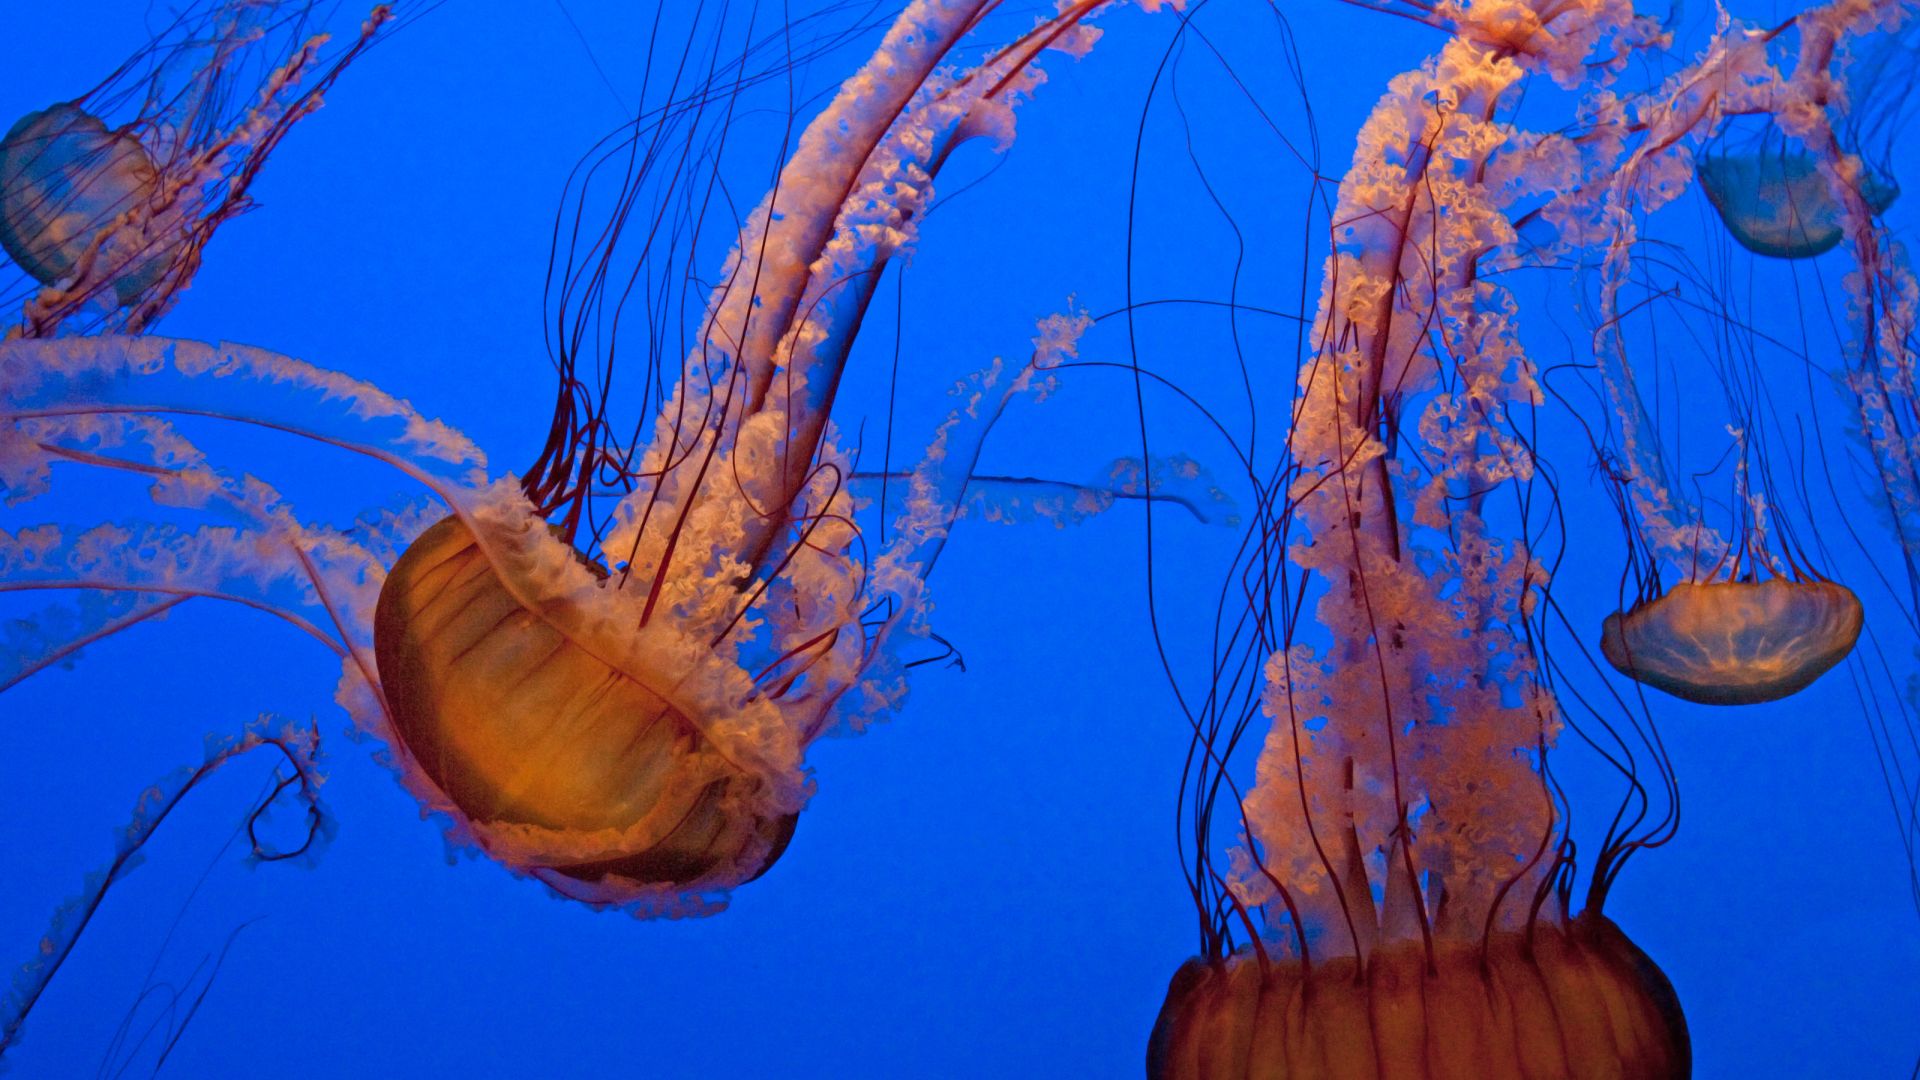 Jellyfish in motion at the Monterey Bay Aquarium